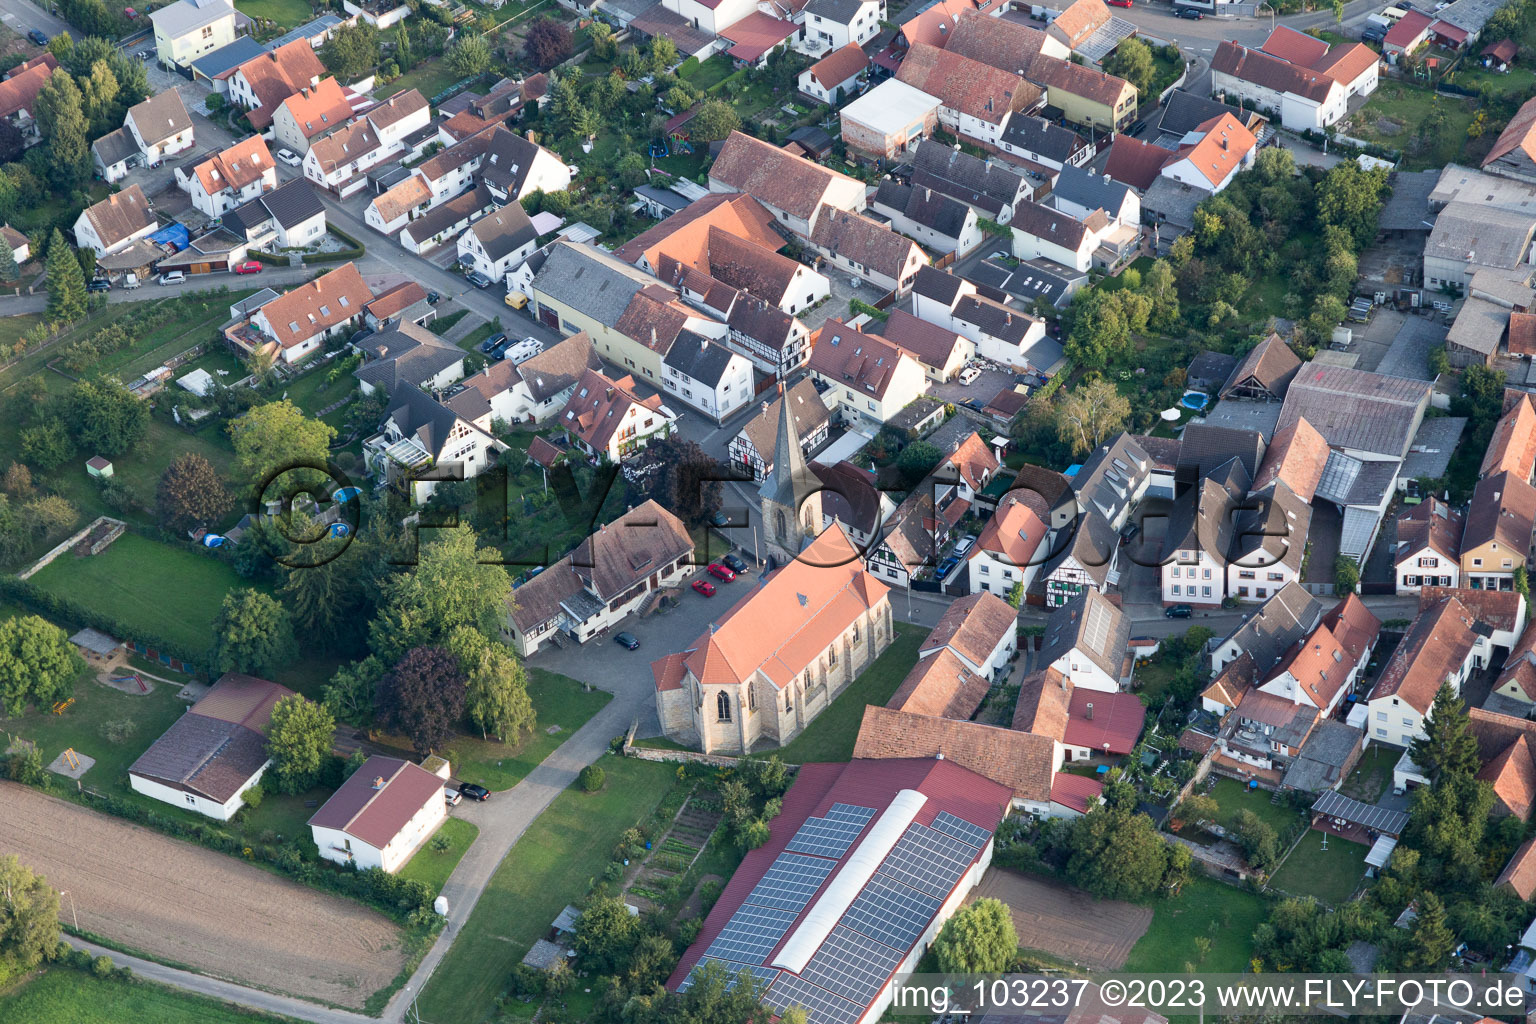 District Ingenheim in Billigheim-Ingenheim in the state Rhineland-Palatinate, Germany viewn from the air